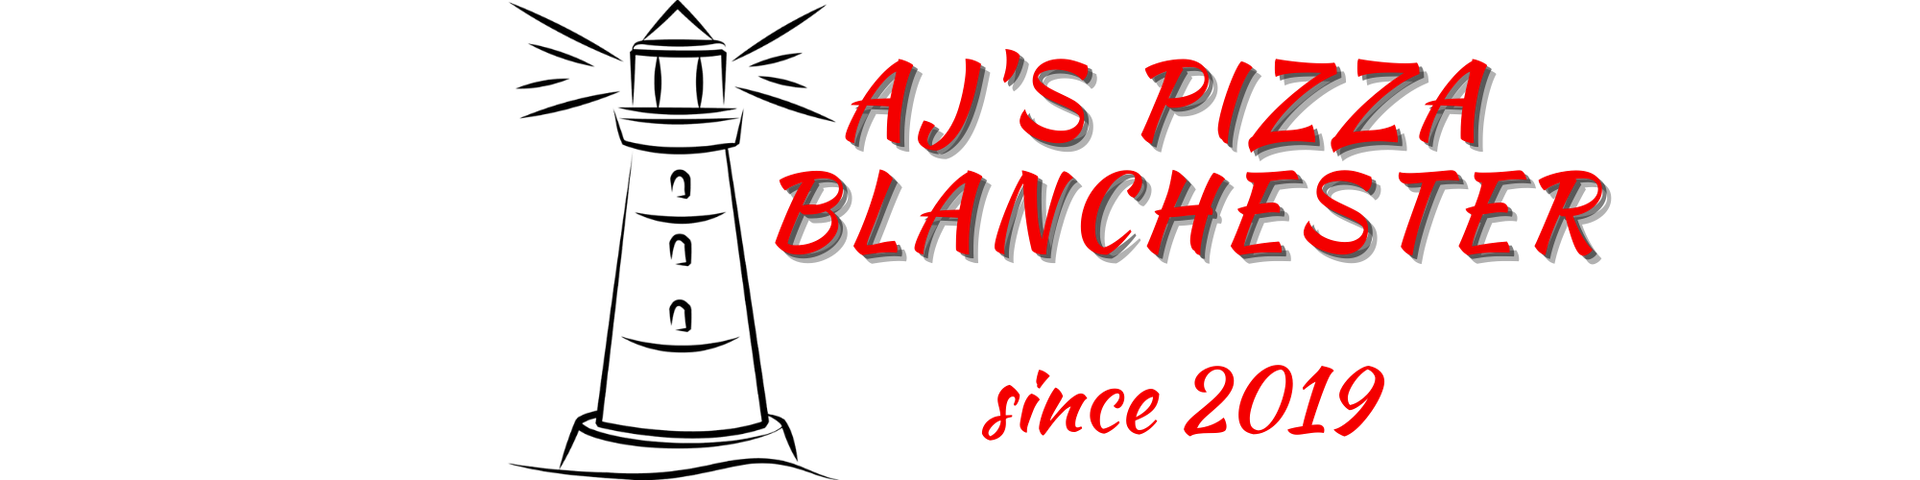 AJ's Pizza Blanchester